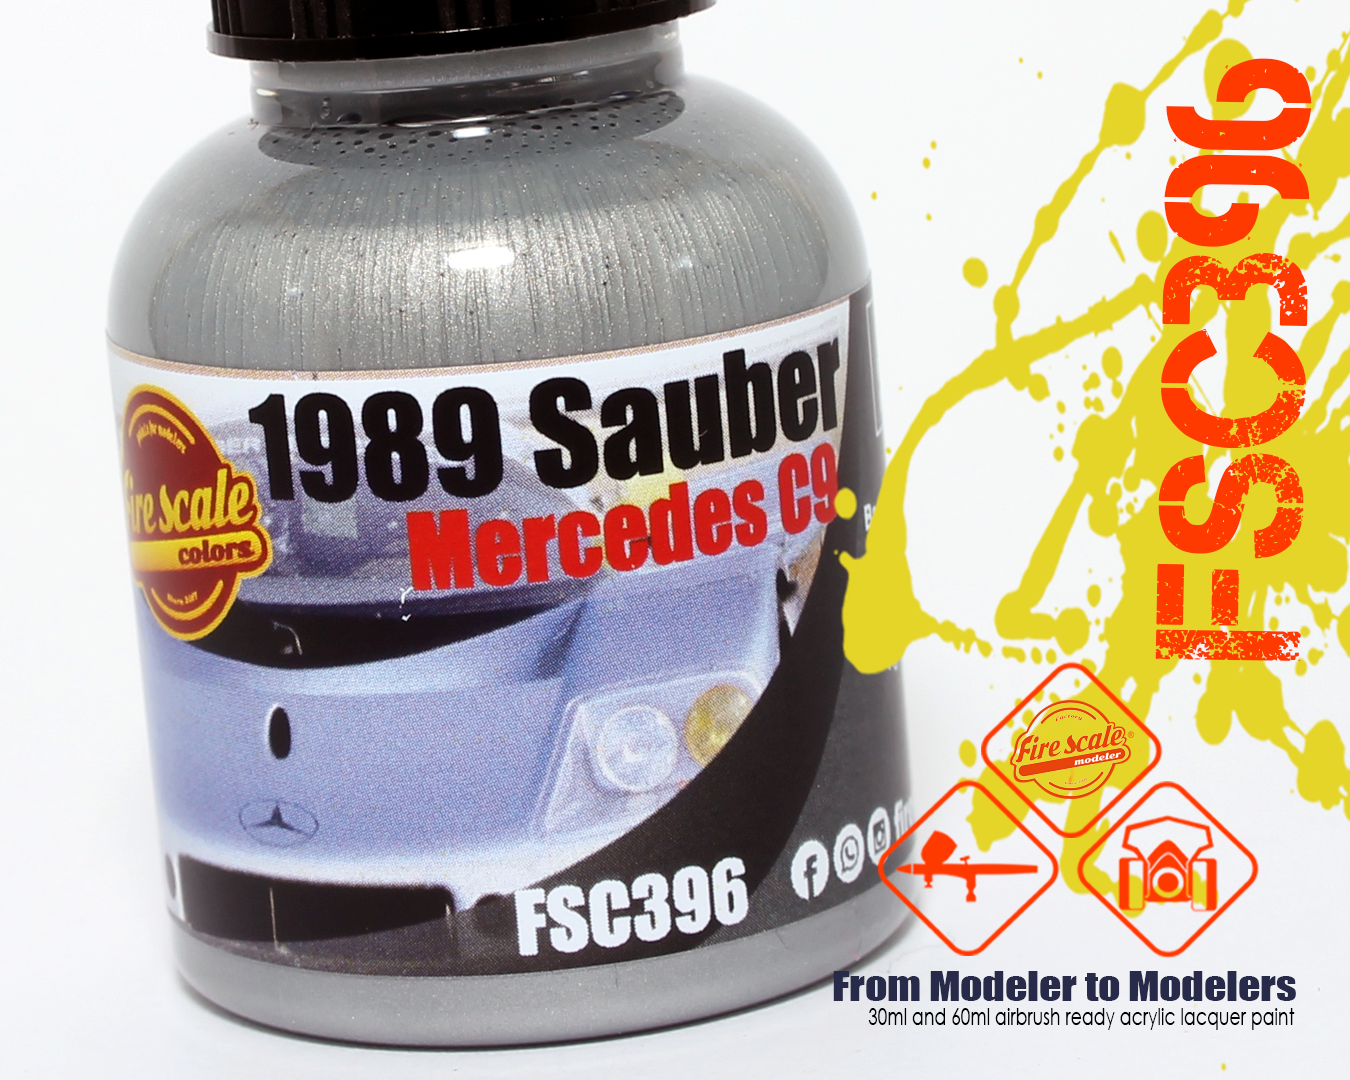 1989 Sauber Mercedes C9